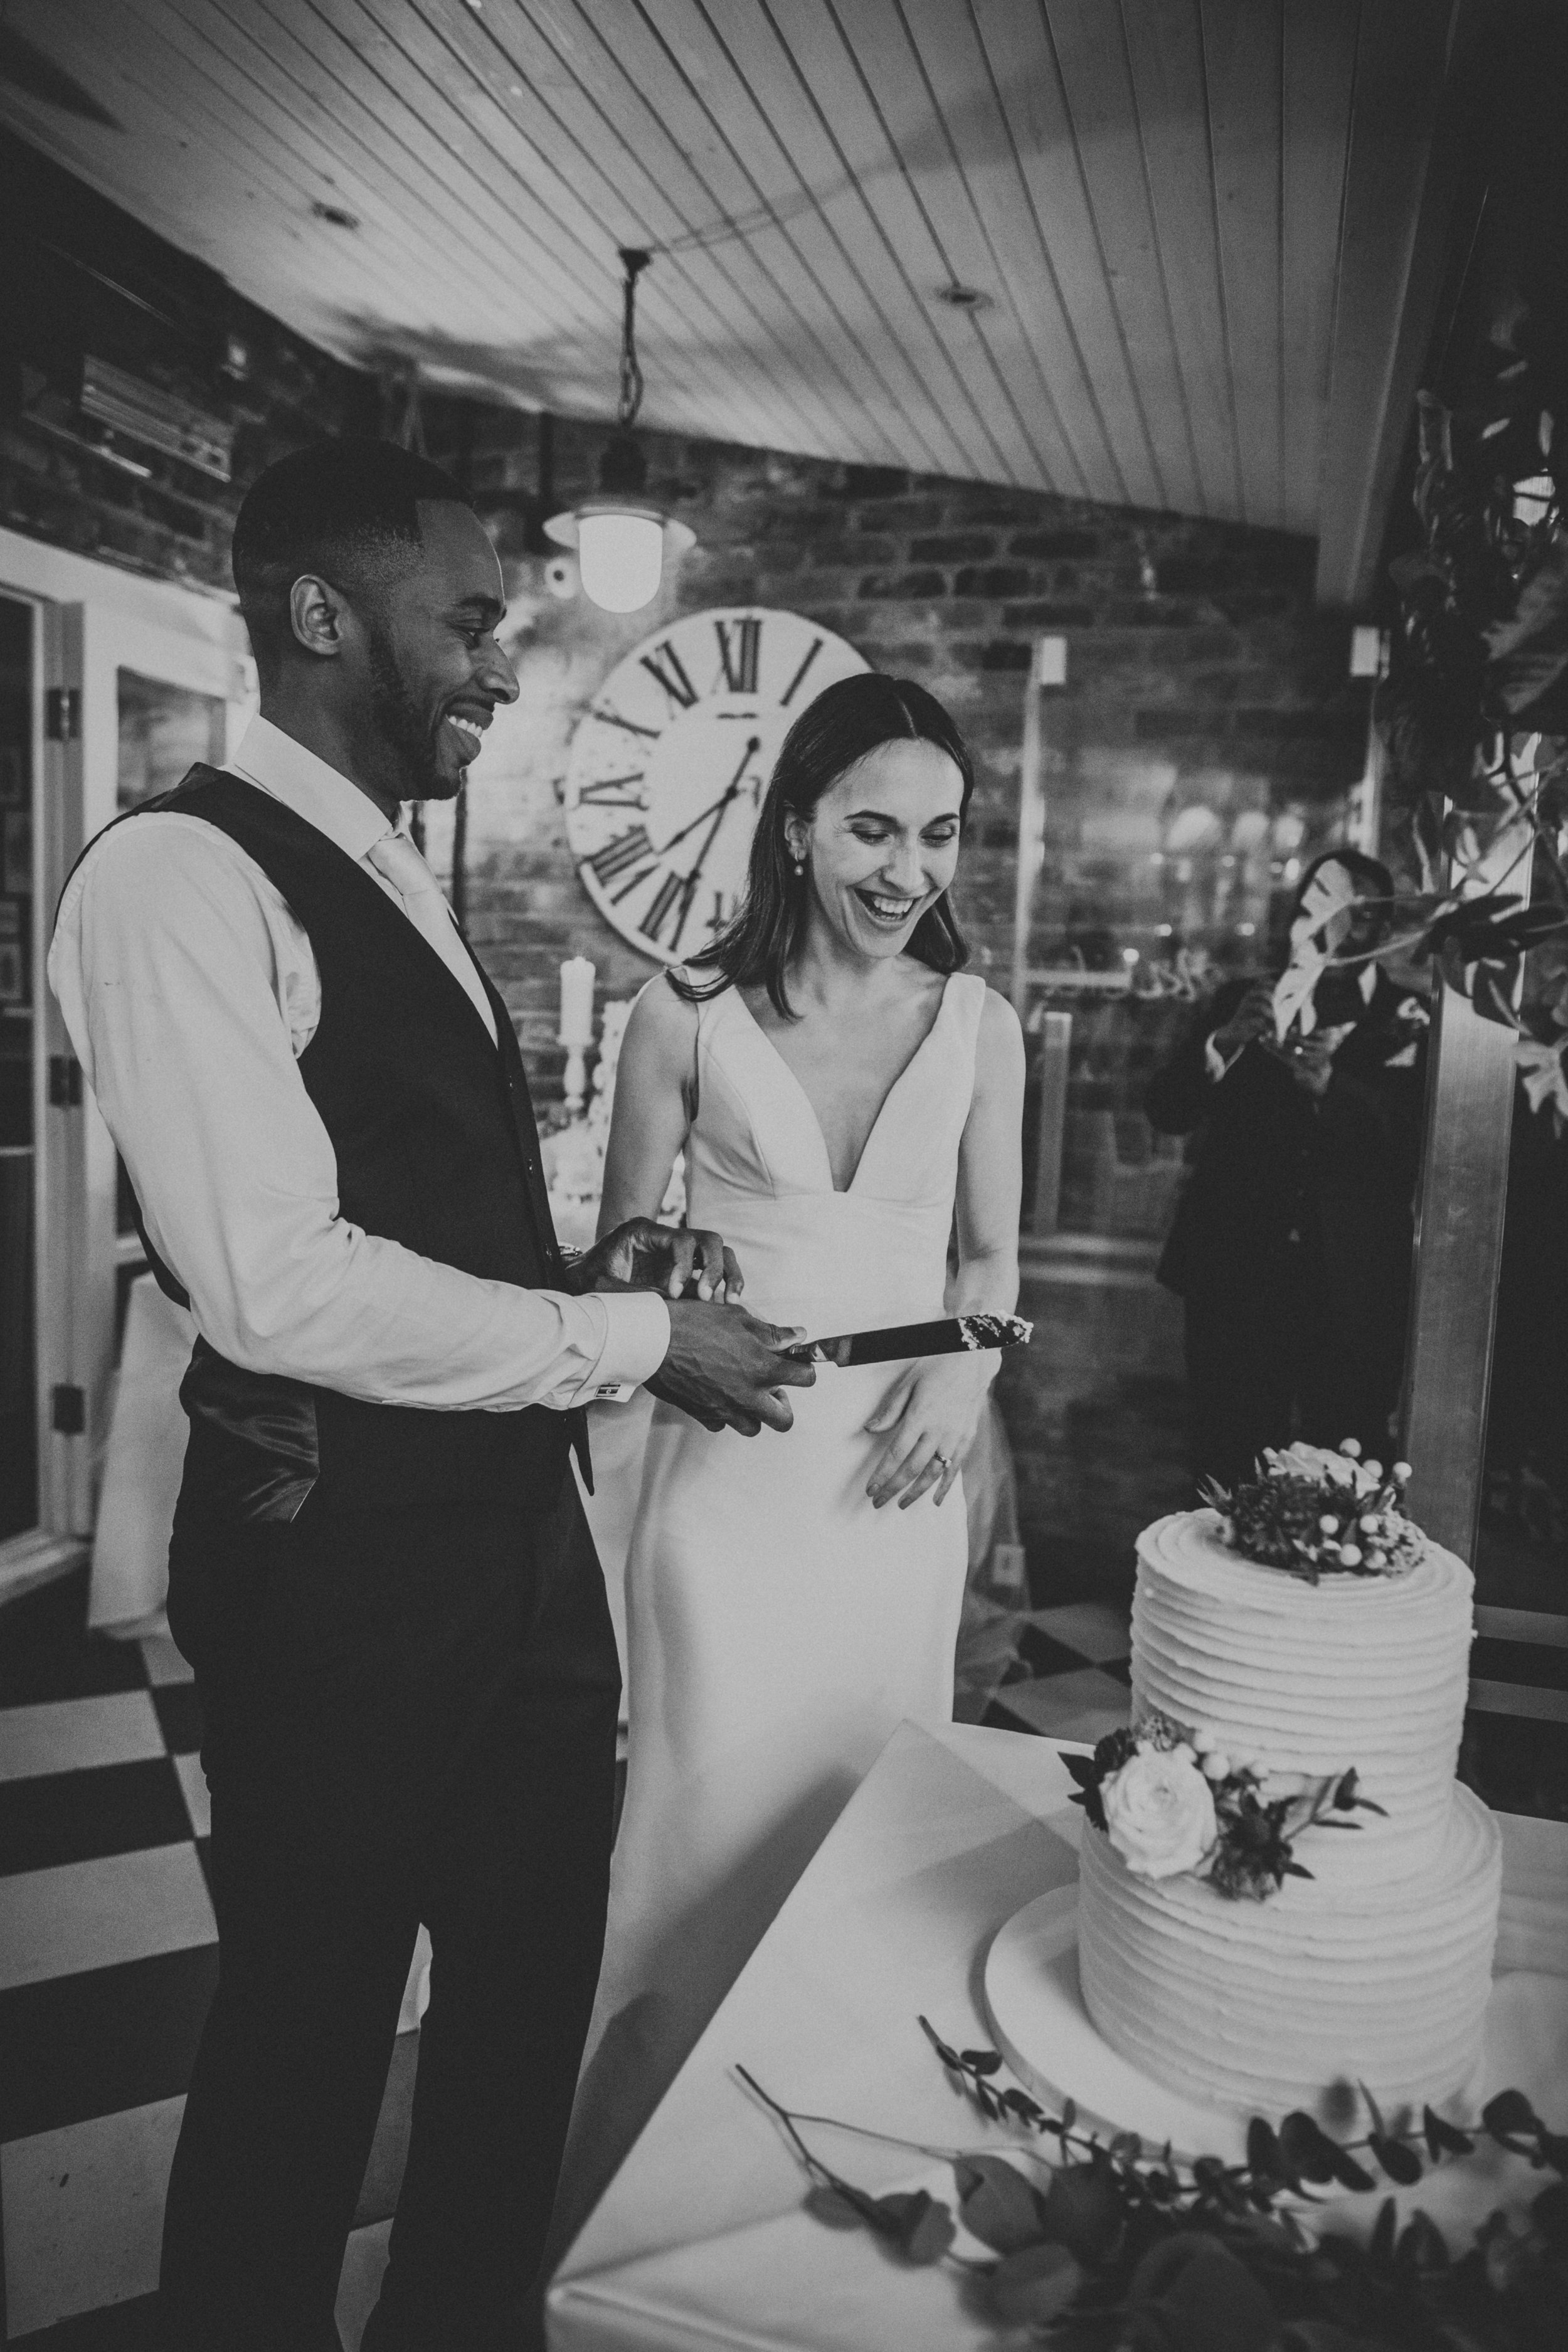 Bride and groom cut wedding cake. 